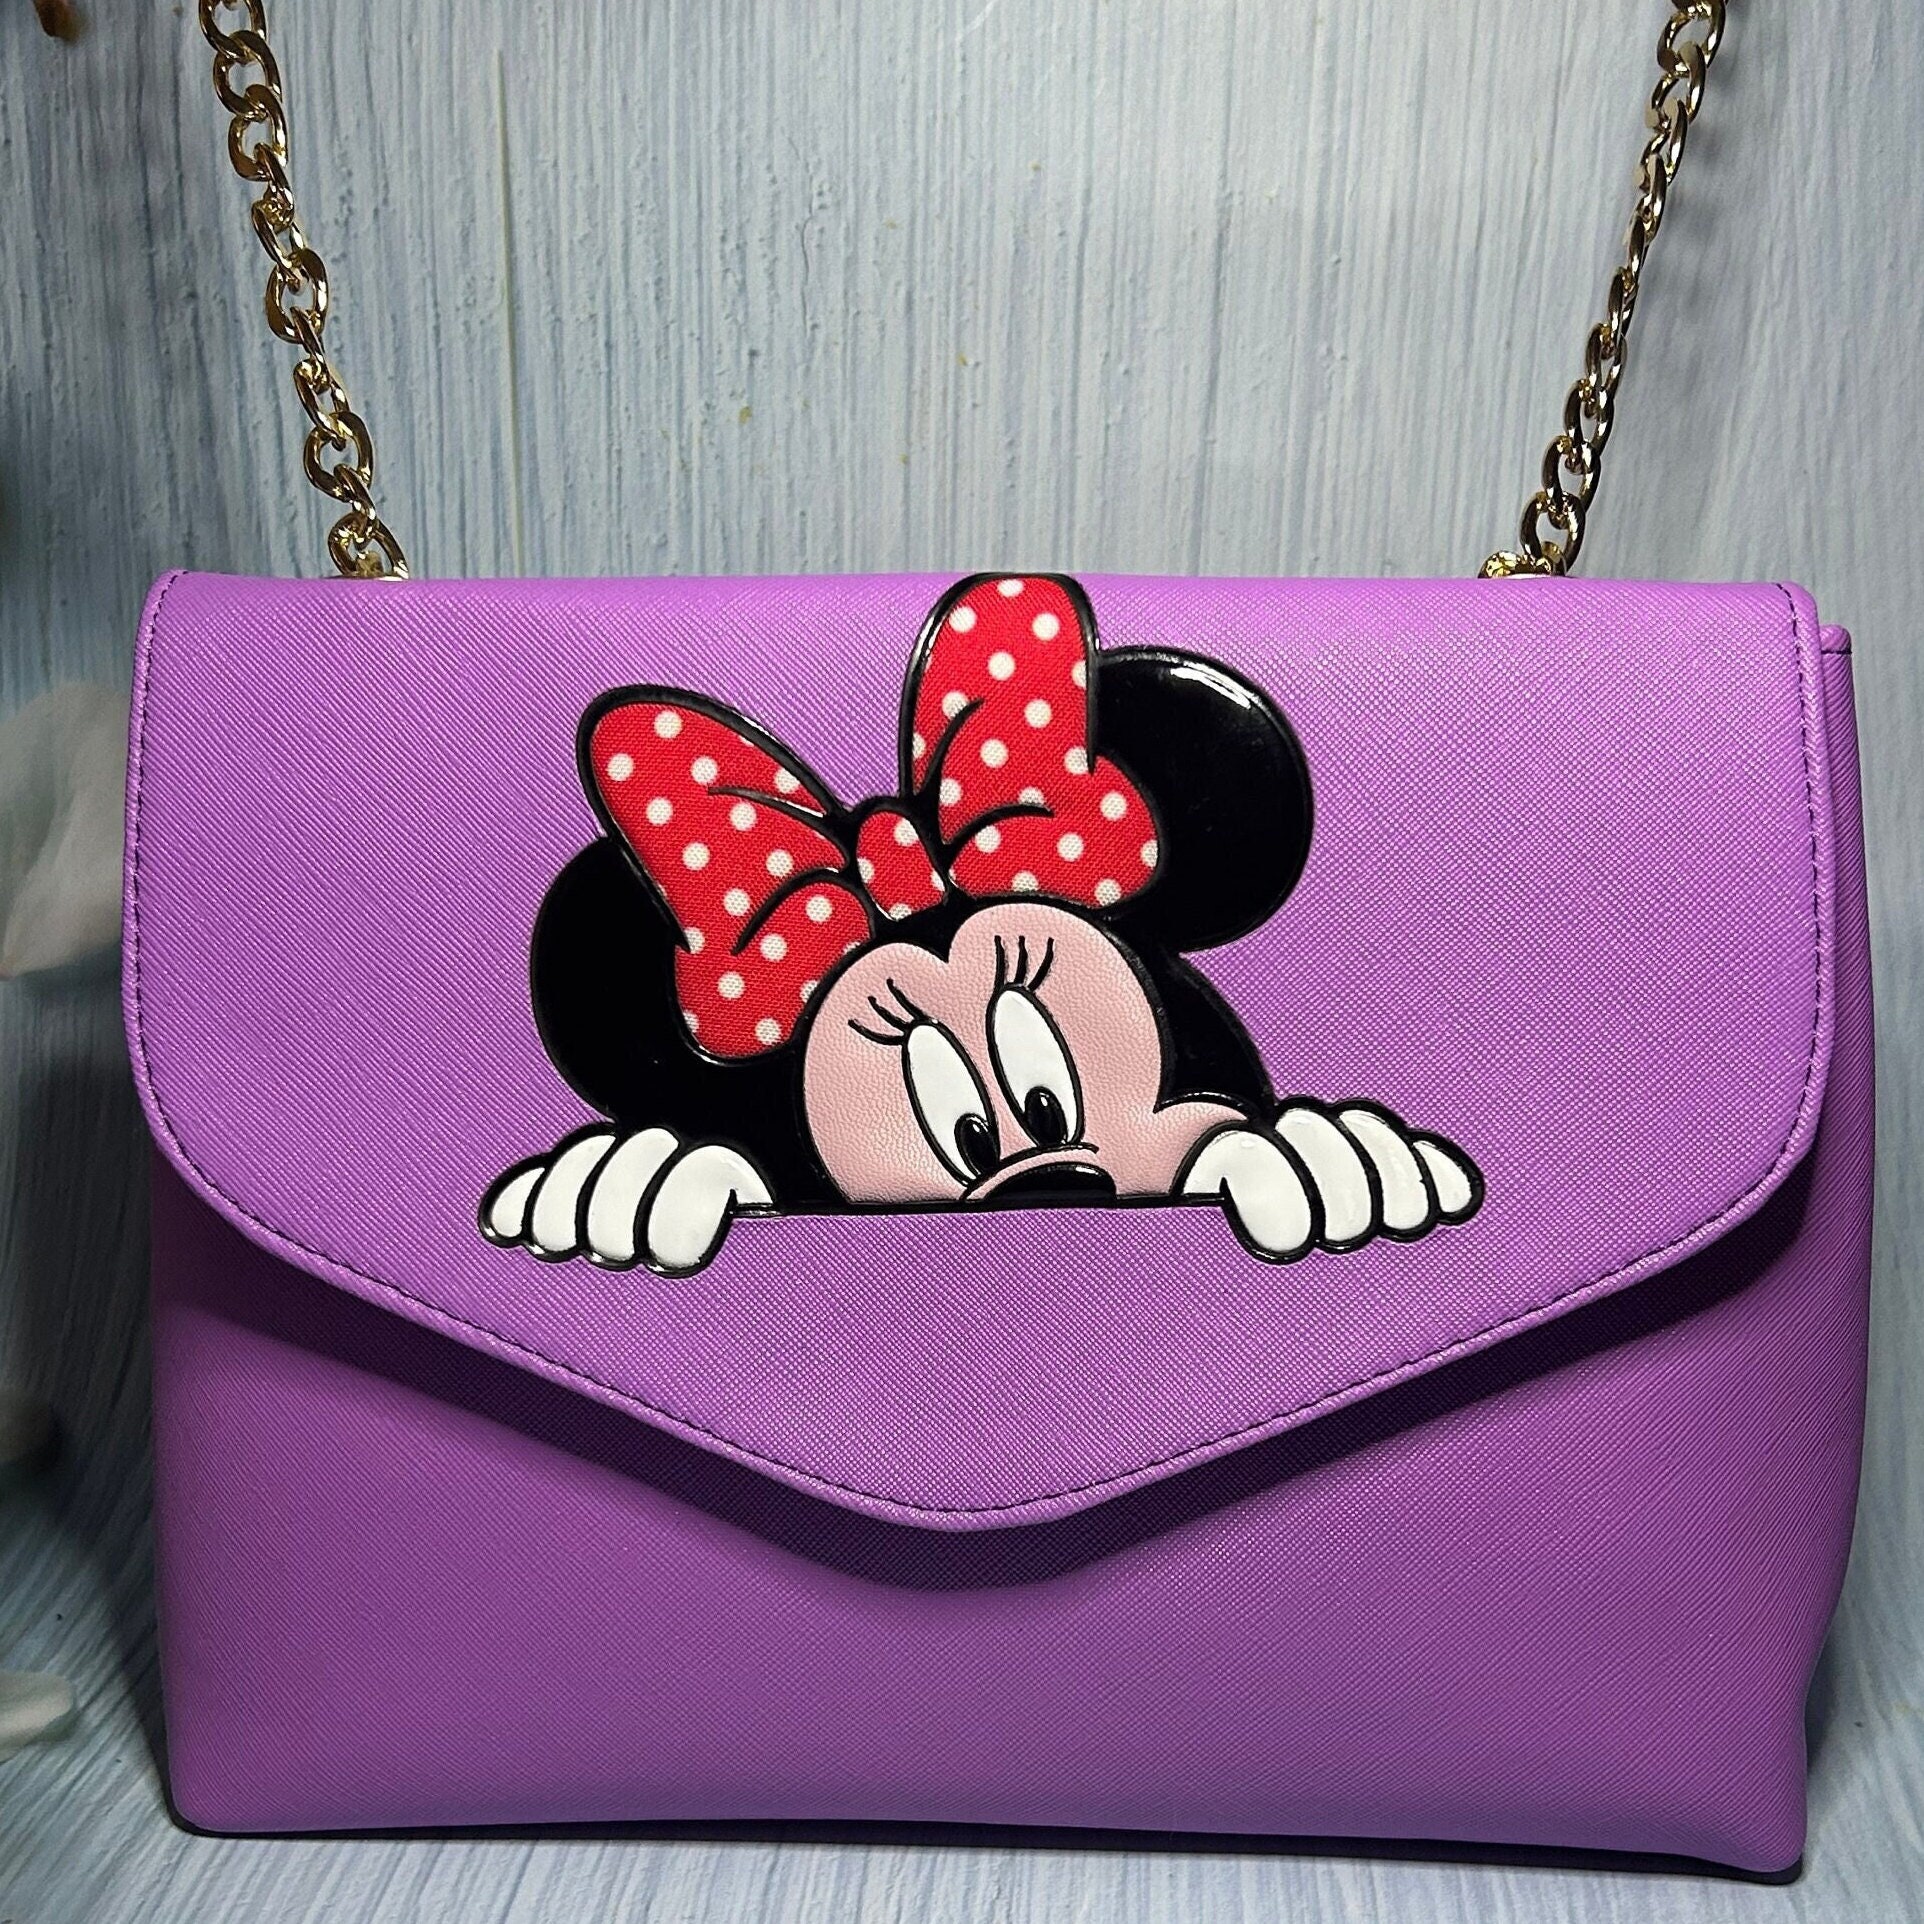 Kate Spade Minnie Mouse Polka Dot Collection! - Disney Fashion Blog